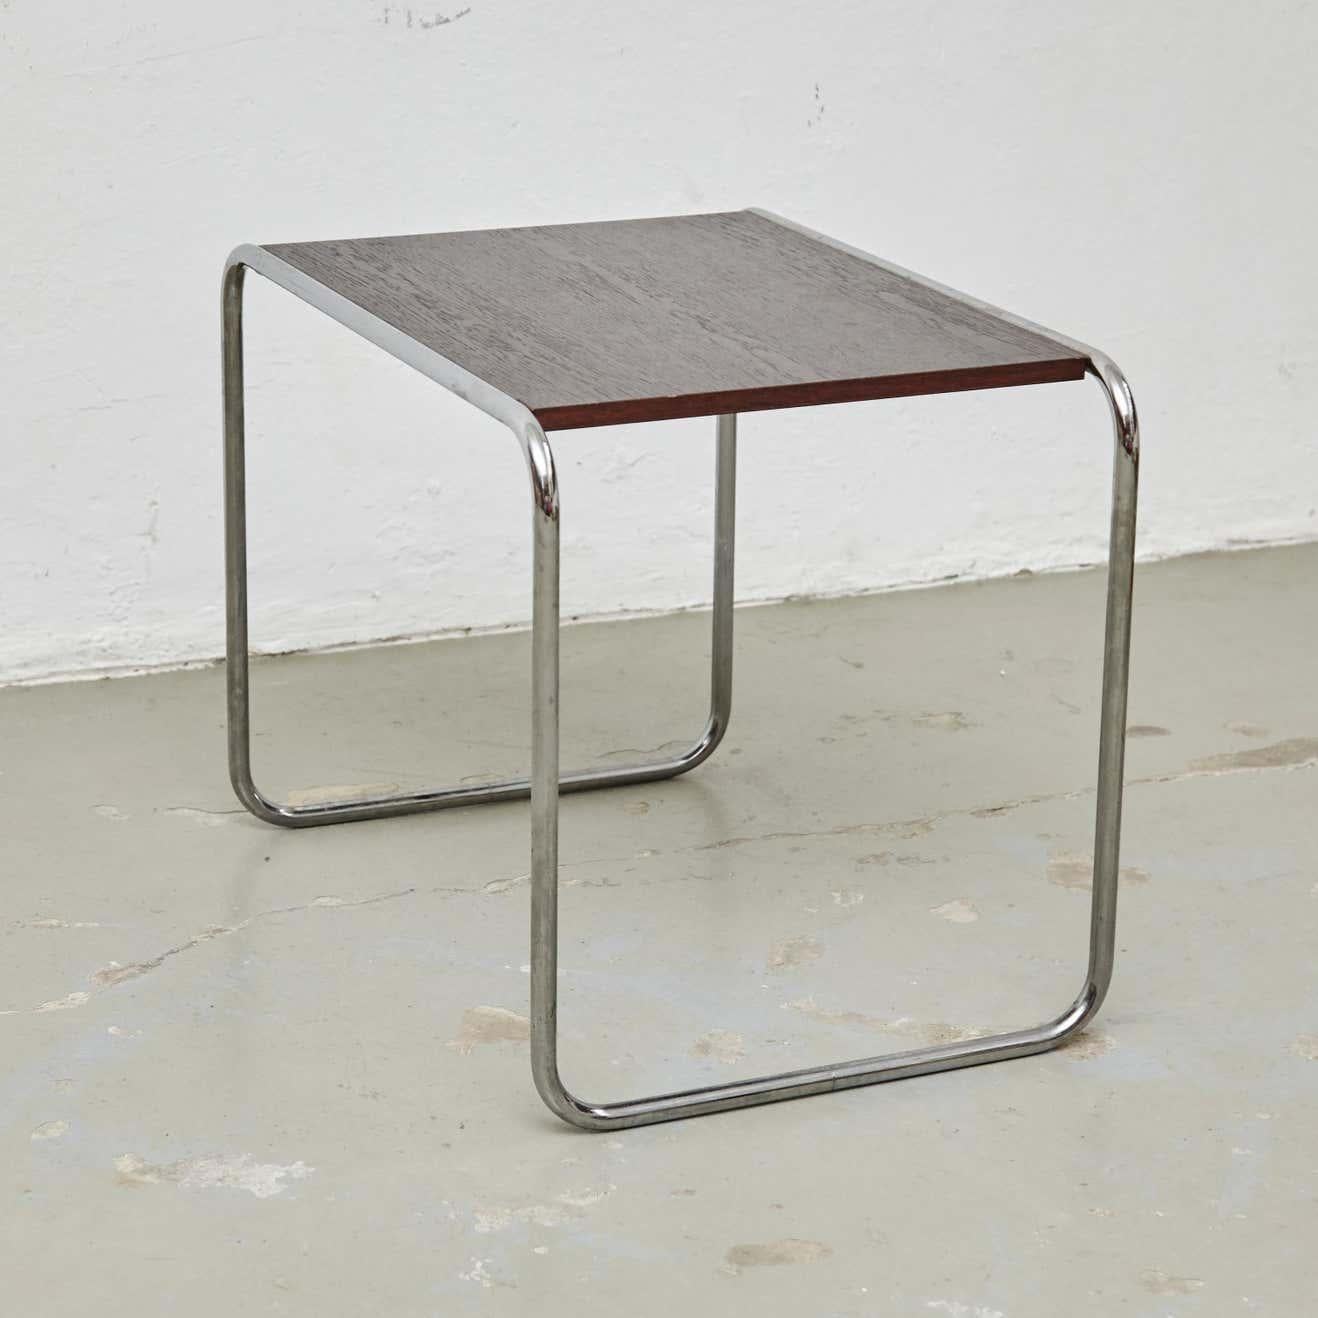 Italian Marcel Breuer Wood and Steel Table by Gavina, circa 1960 For Sale